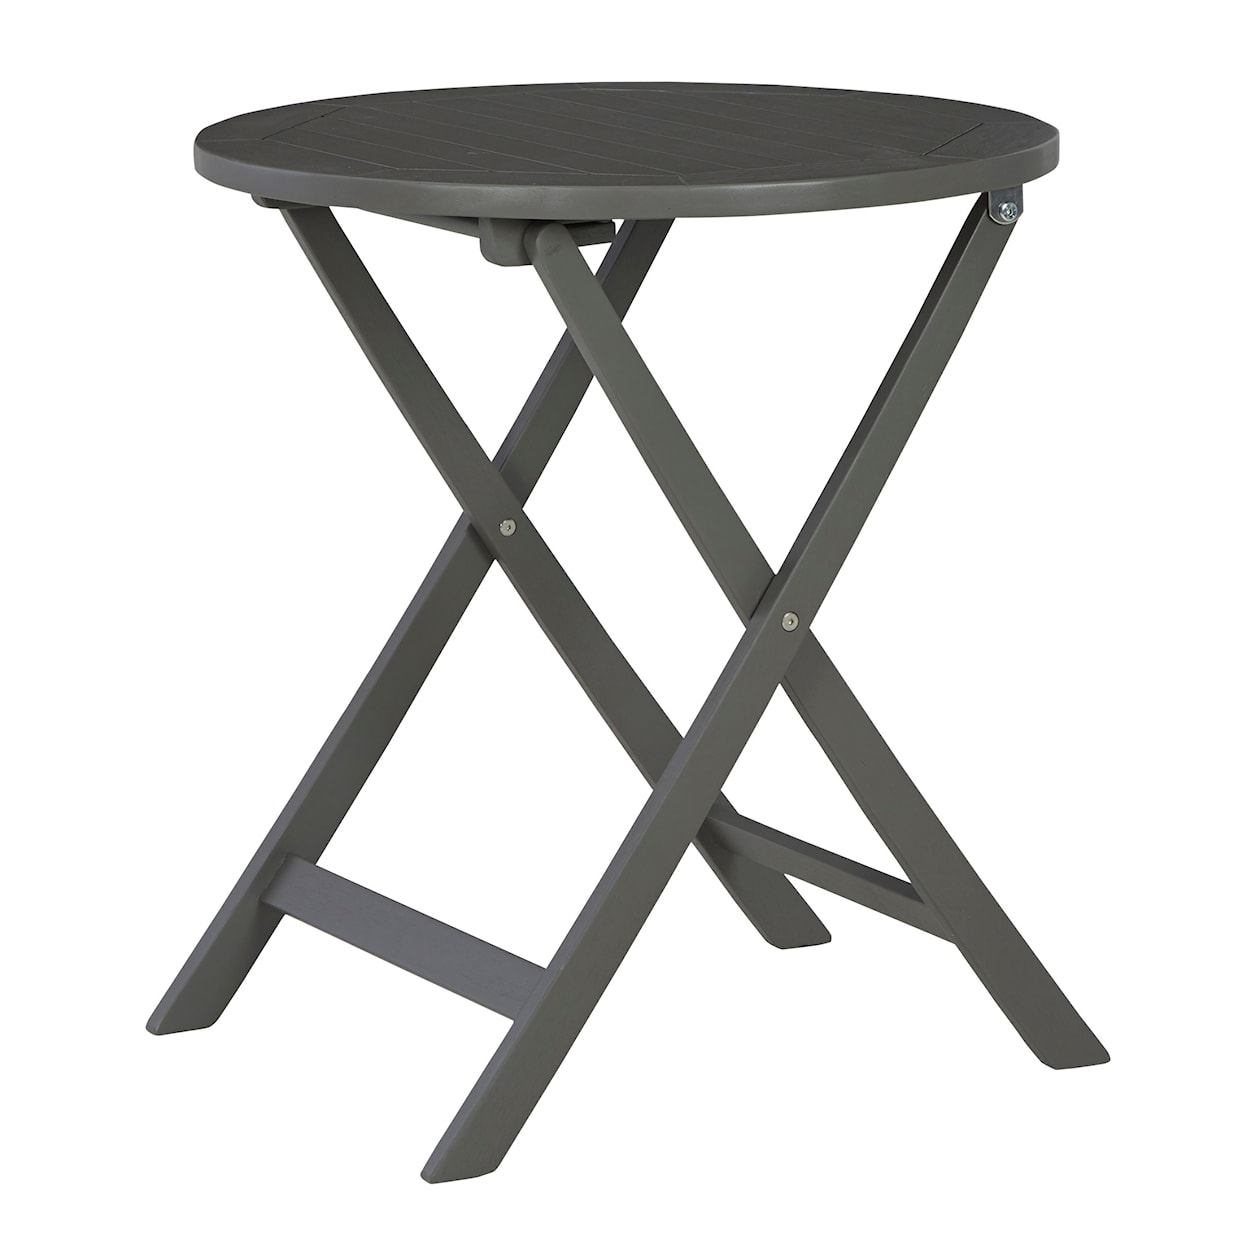 Michael Alan Select Safari Peak Outdoor Table and Chairs (Set of 3)